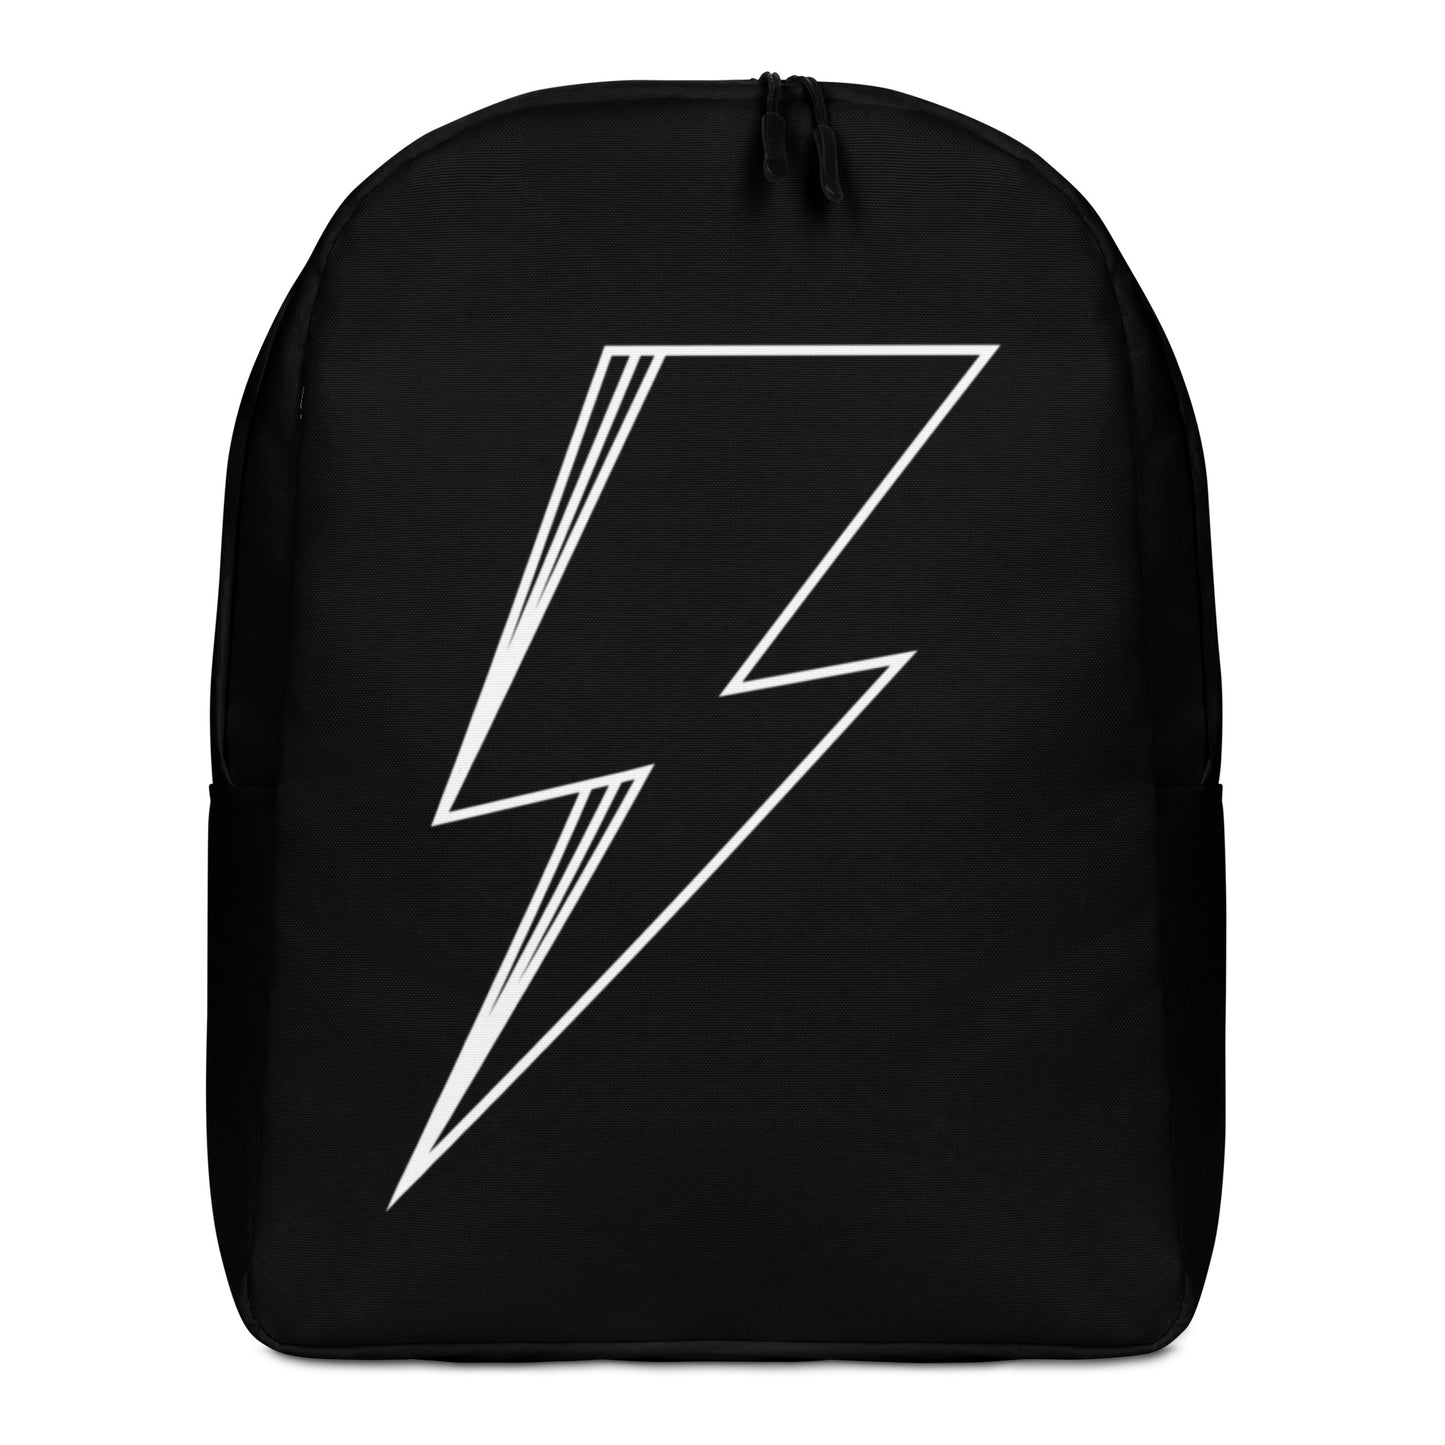 SVOLTA Lightning Bolt Minimalist Backpack in Black and White